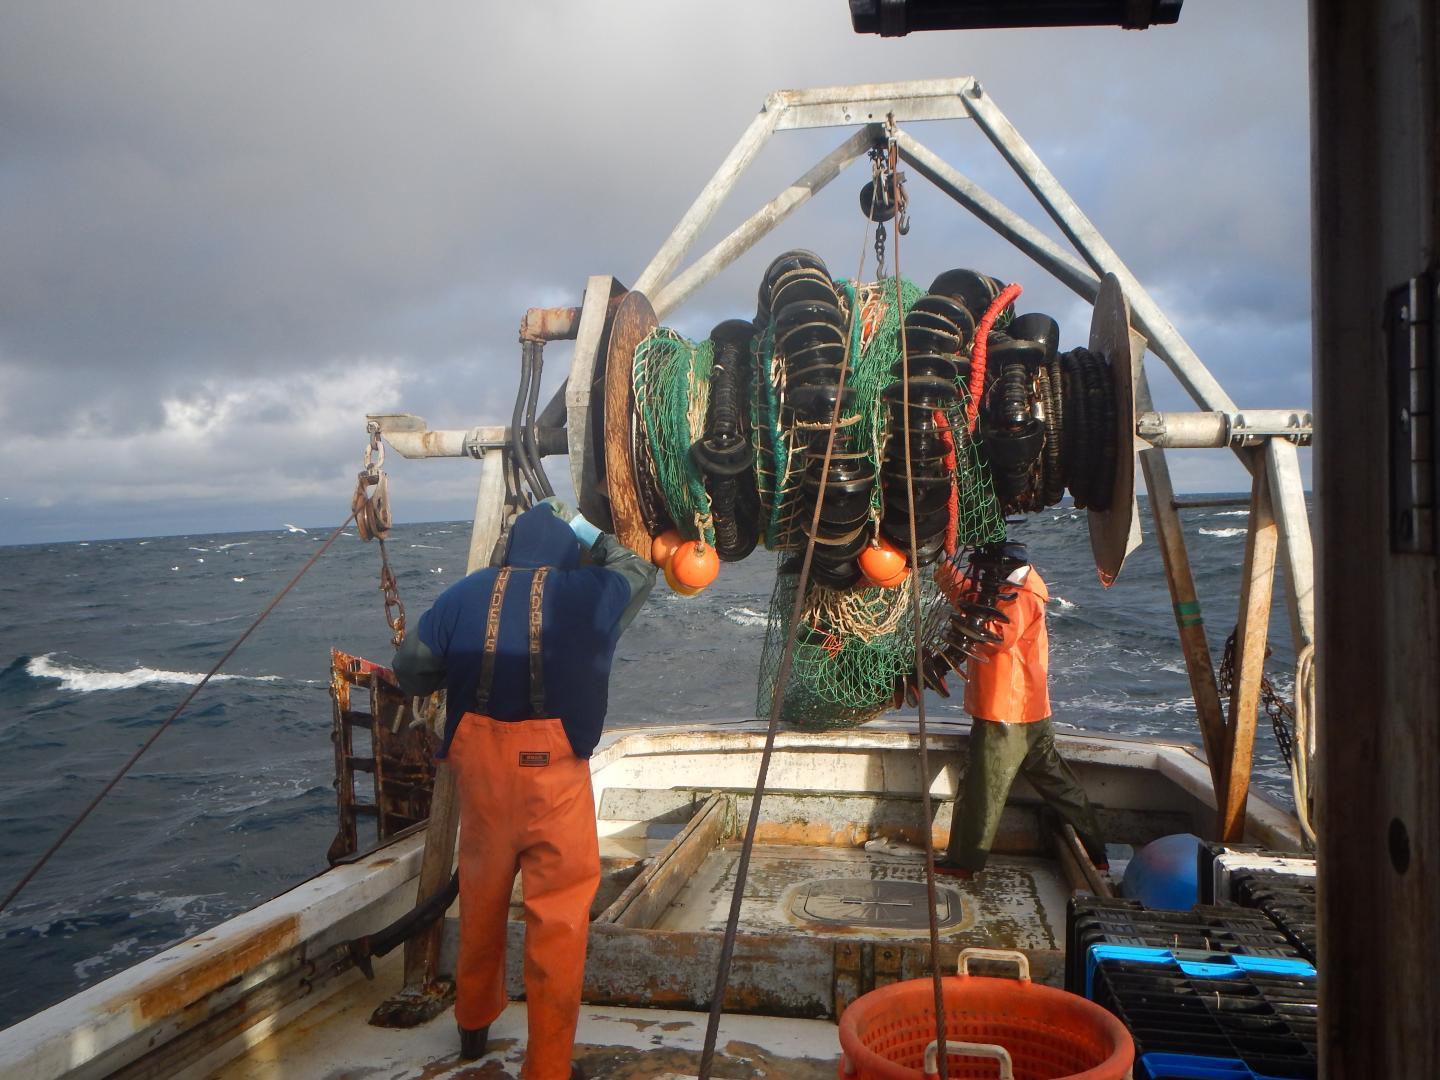 Cod Fishing in Maine [IMAGE] EurekAlert! Science News Releases